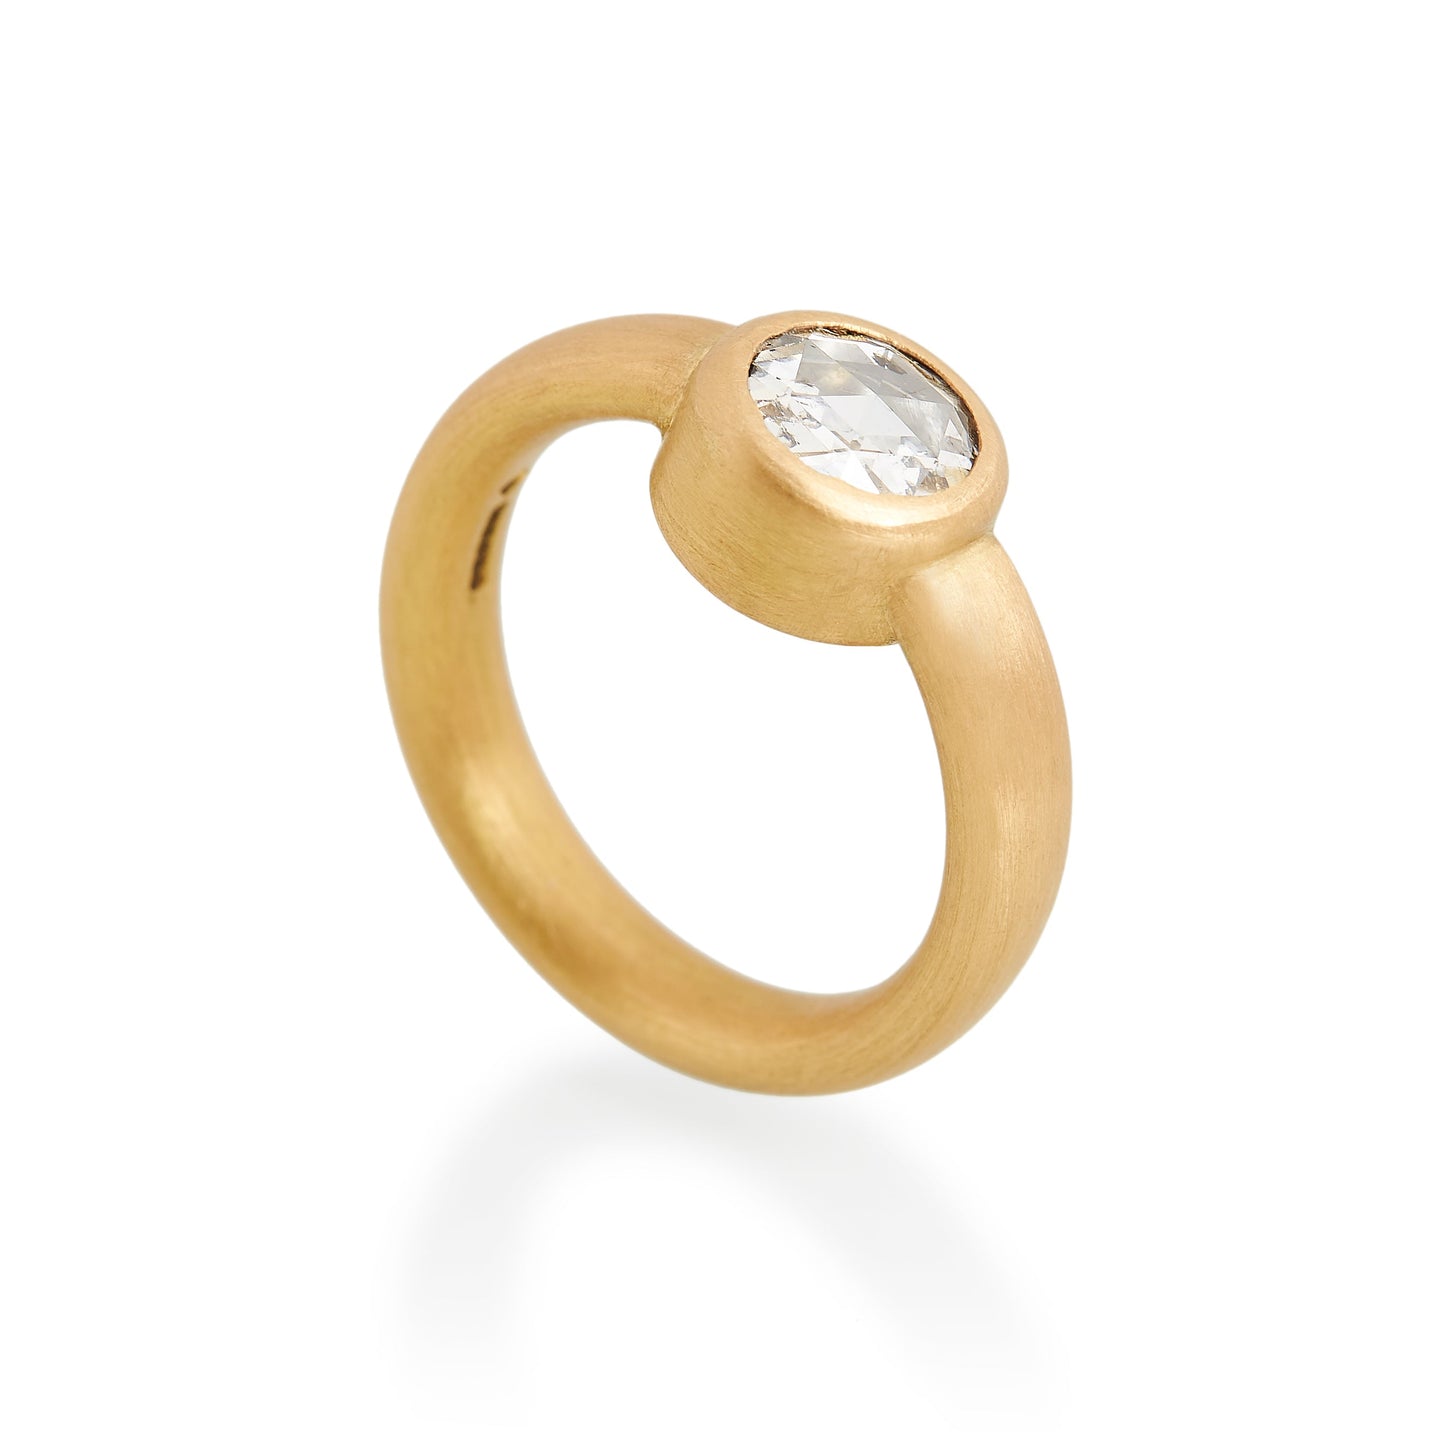 Rose Cut Diamond Ring, 22ct Gold